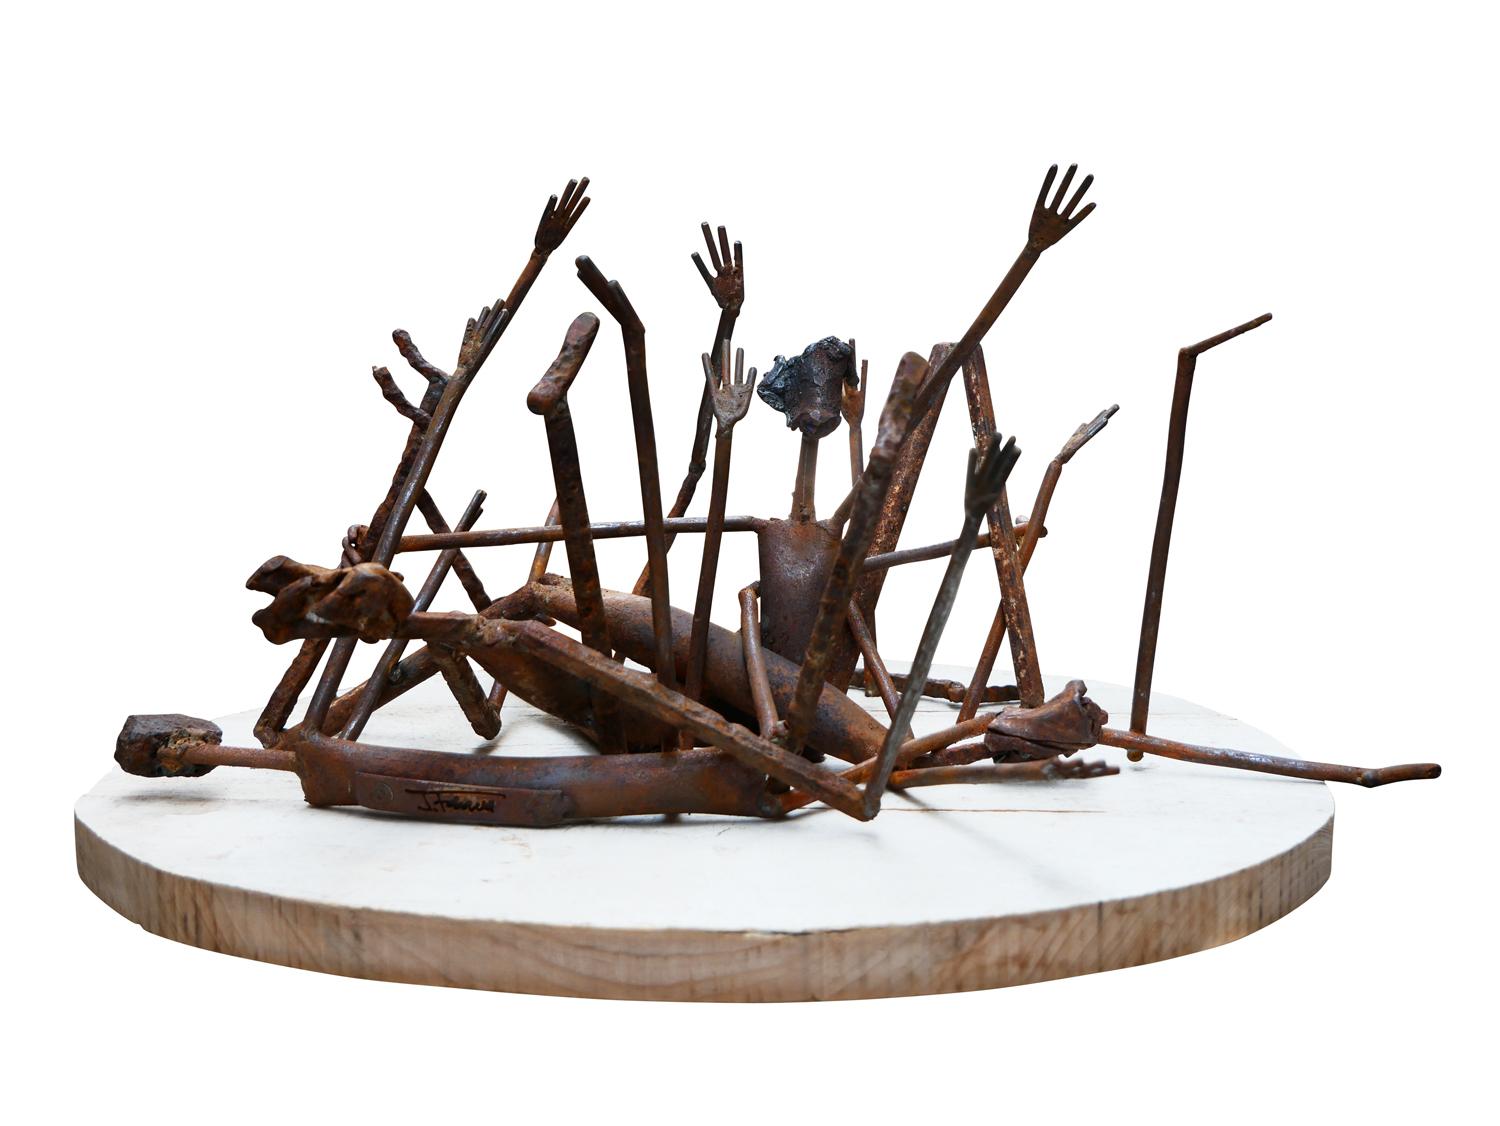 Jack Farrell Figurative Sculpture - "Twister" Modernist Abstract Figurative Steel and Wood Sculpture